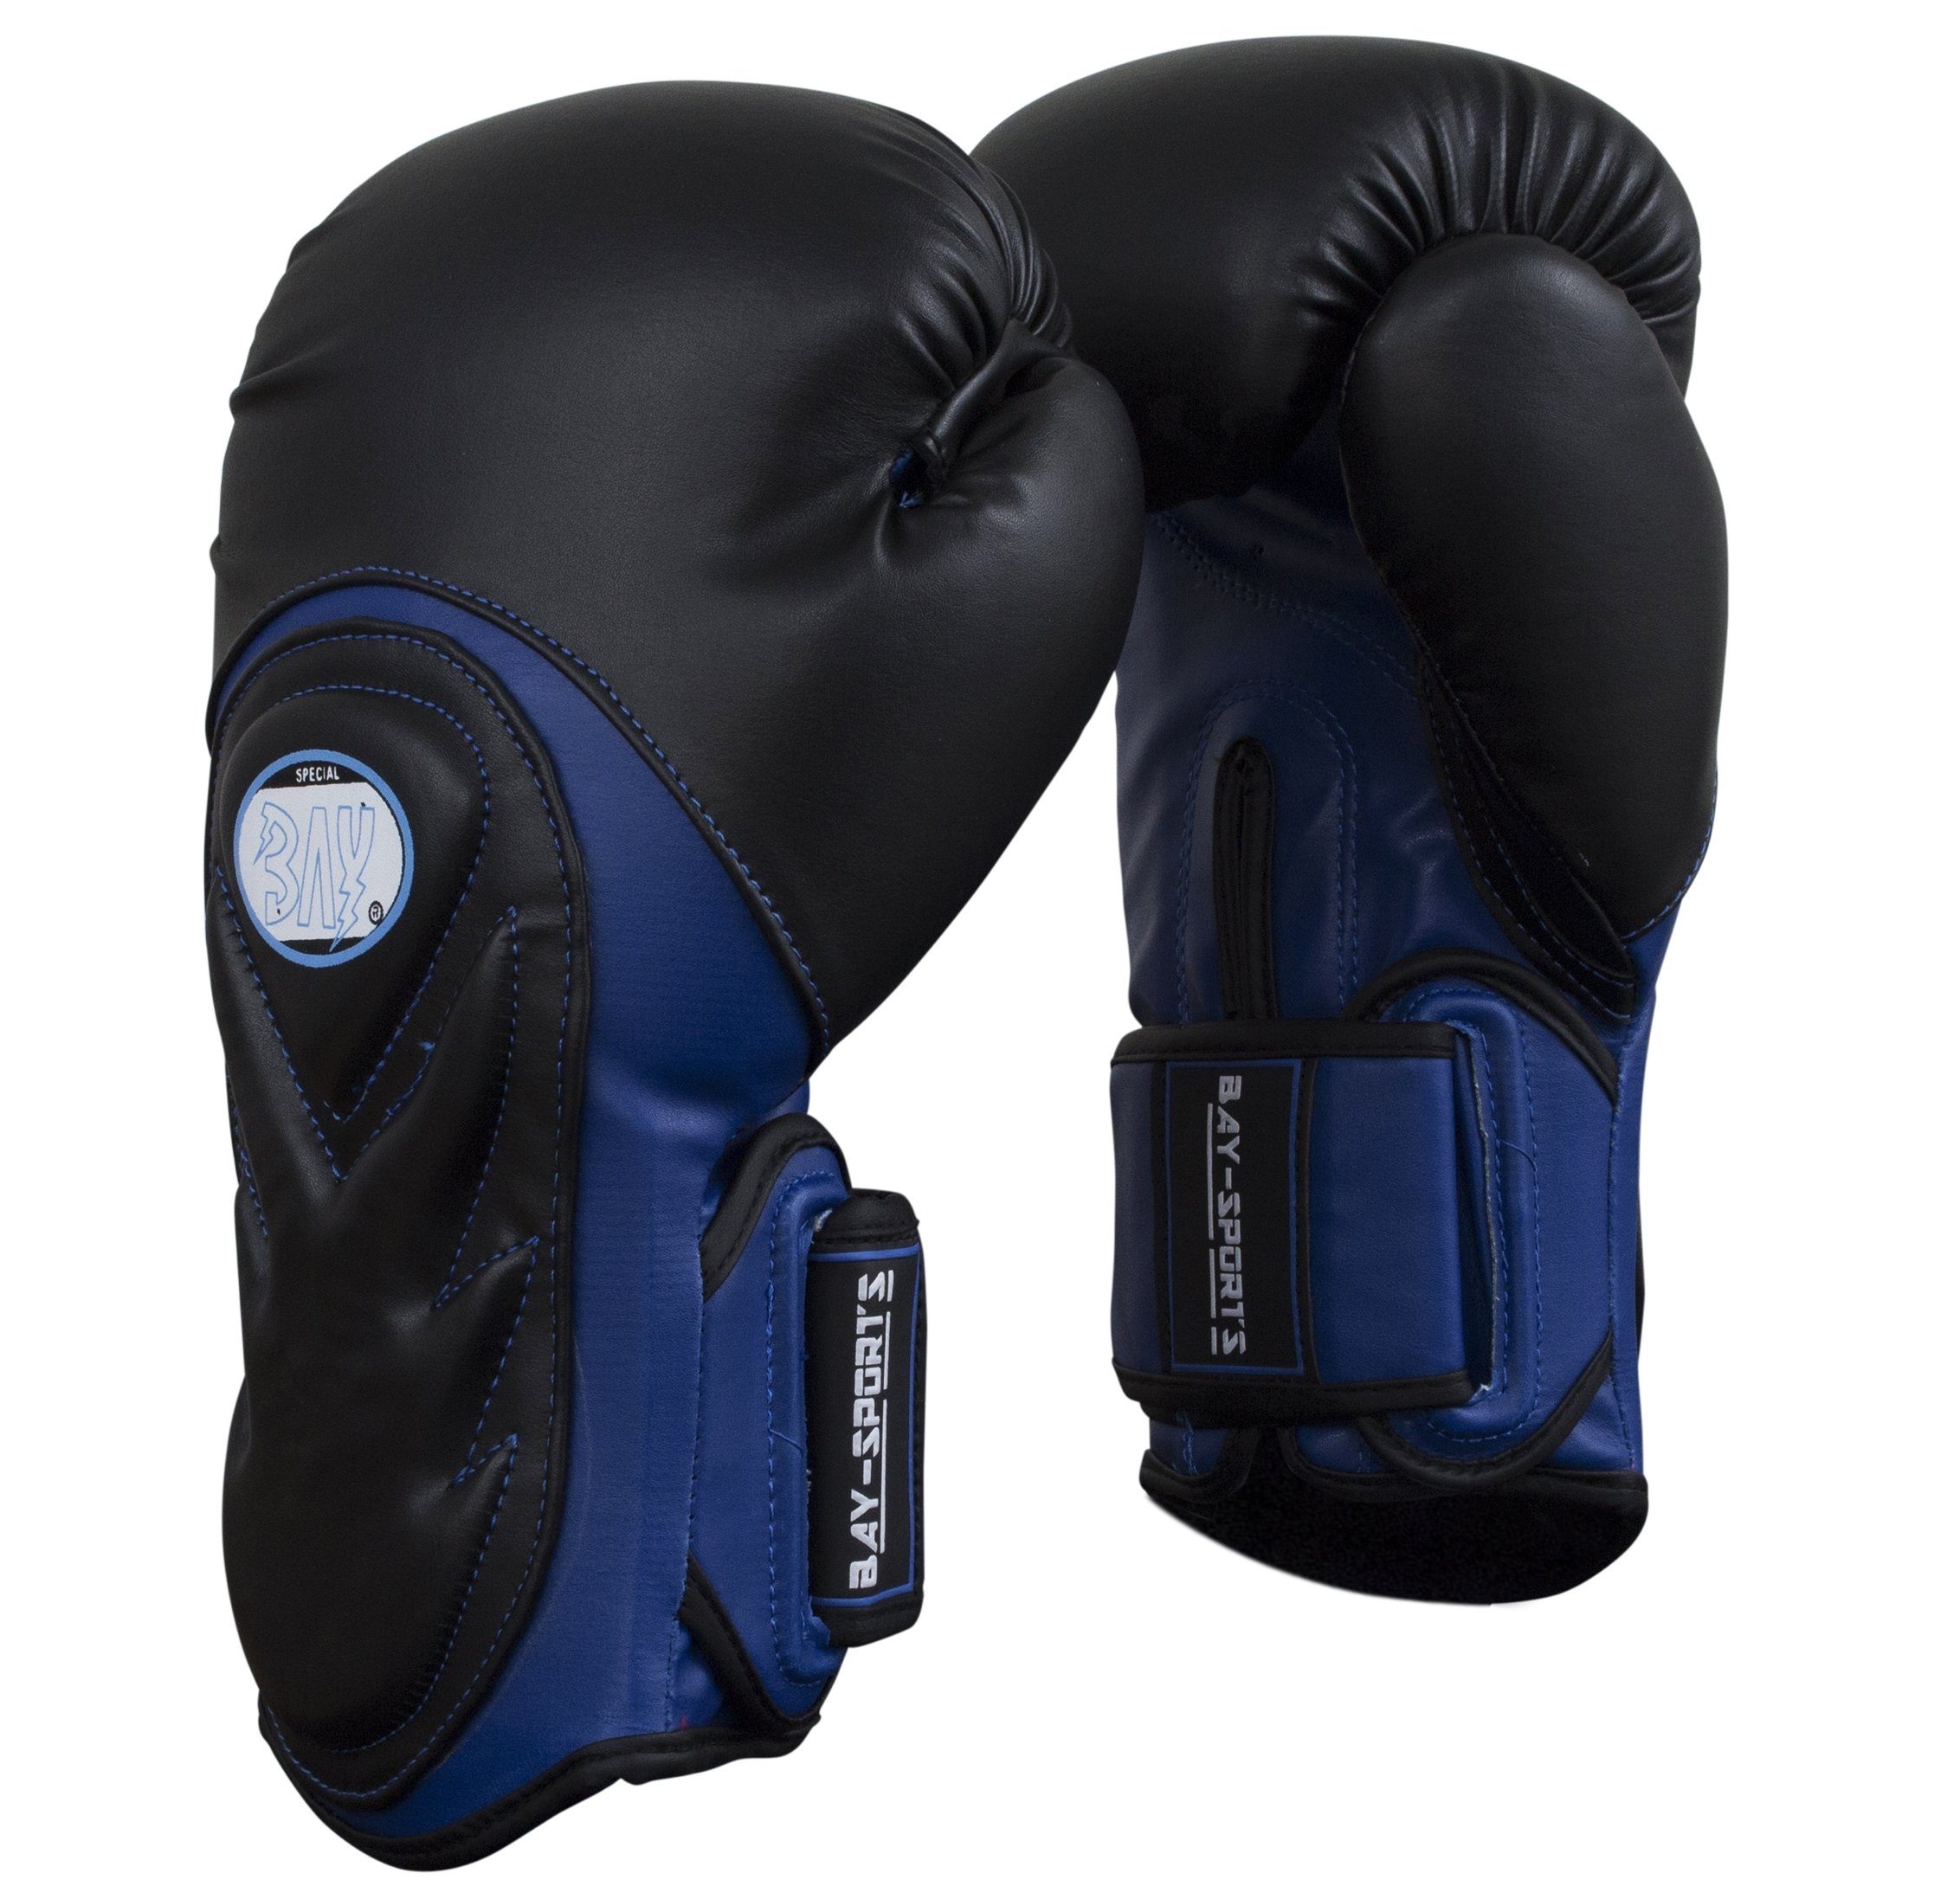 BAY-Sports Boxhandschuhe Bad Kickboxen Style Boxen schwarz/blau Box-Handschuhe